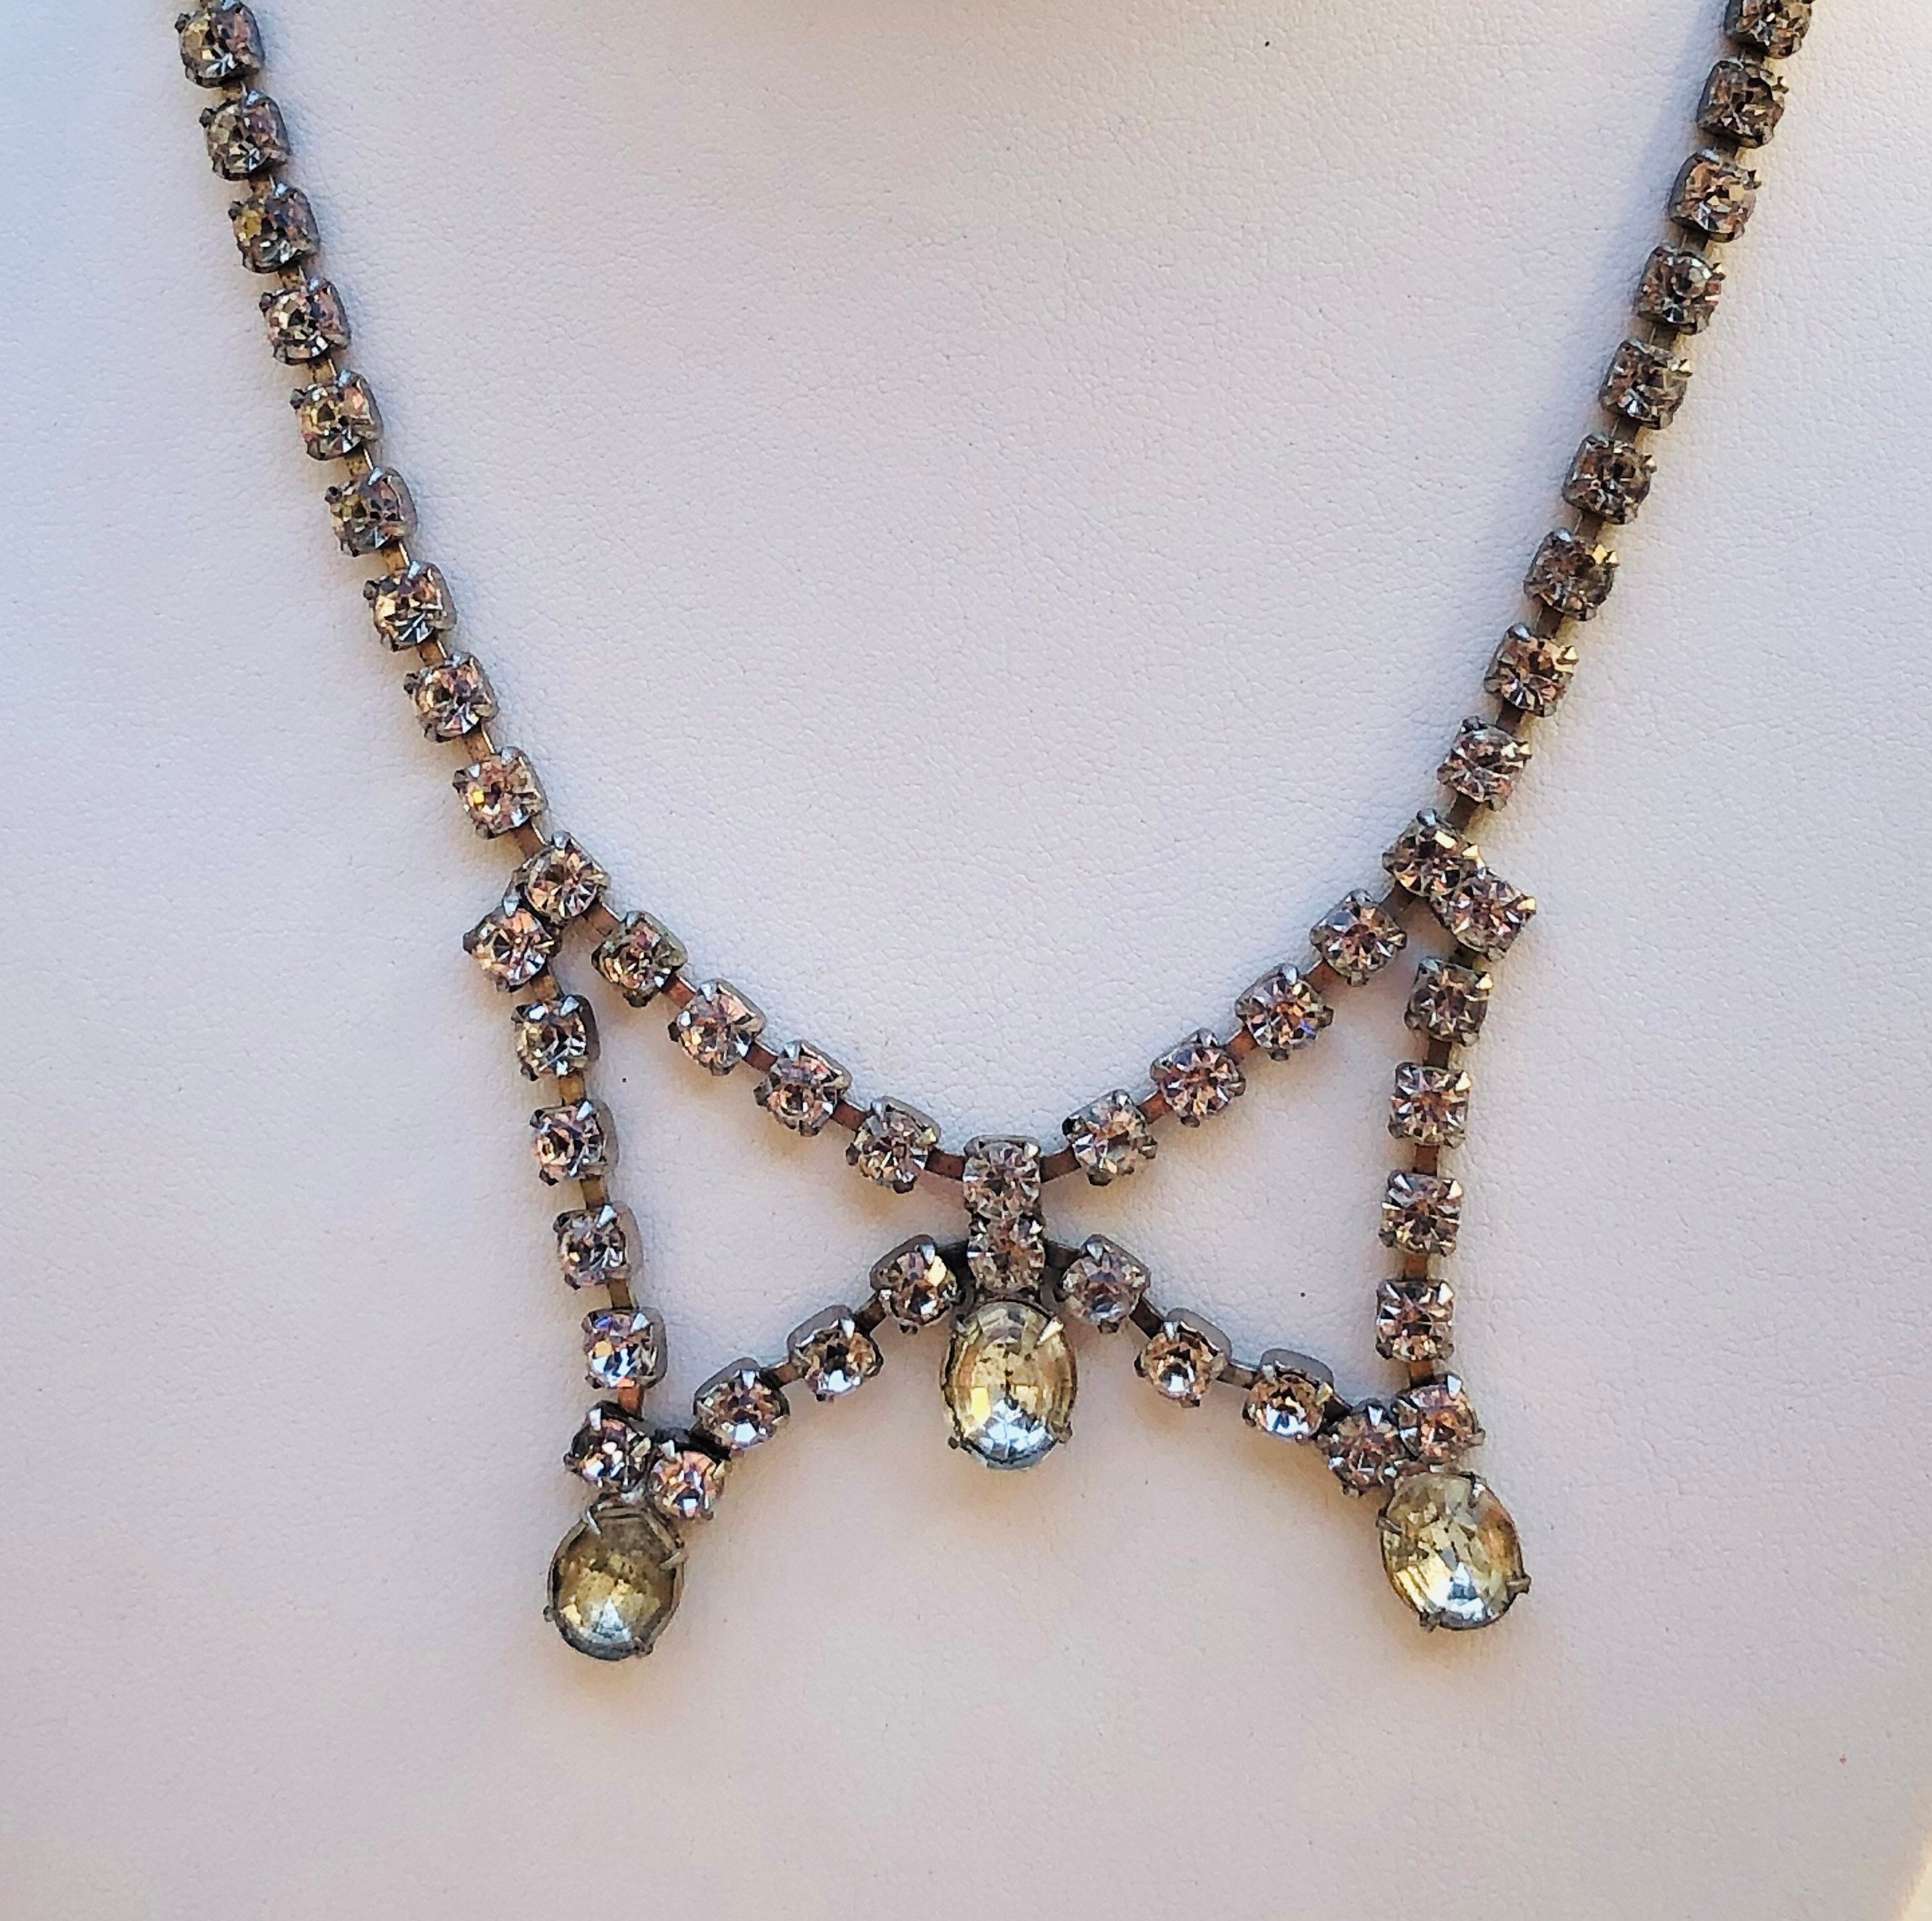 1930s Rhinestone Necklace | Vintage inspired necklace, Beautiful jewelry, Vintage  rhinestone jewelry